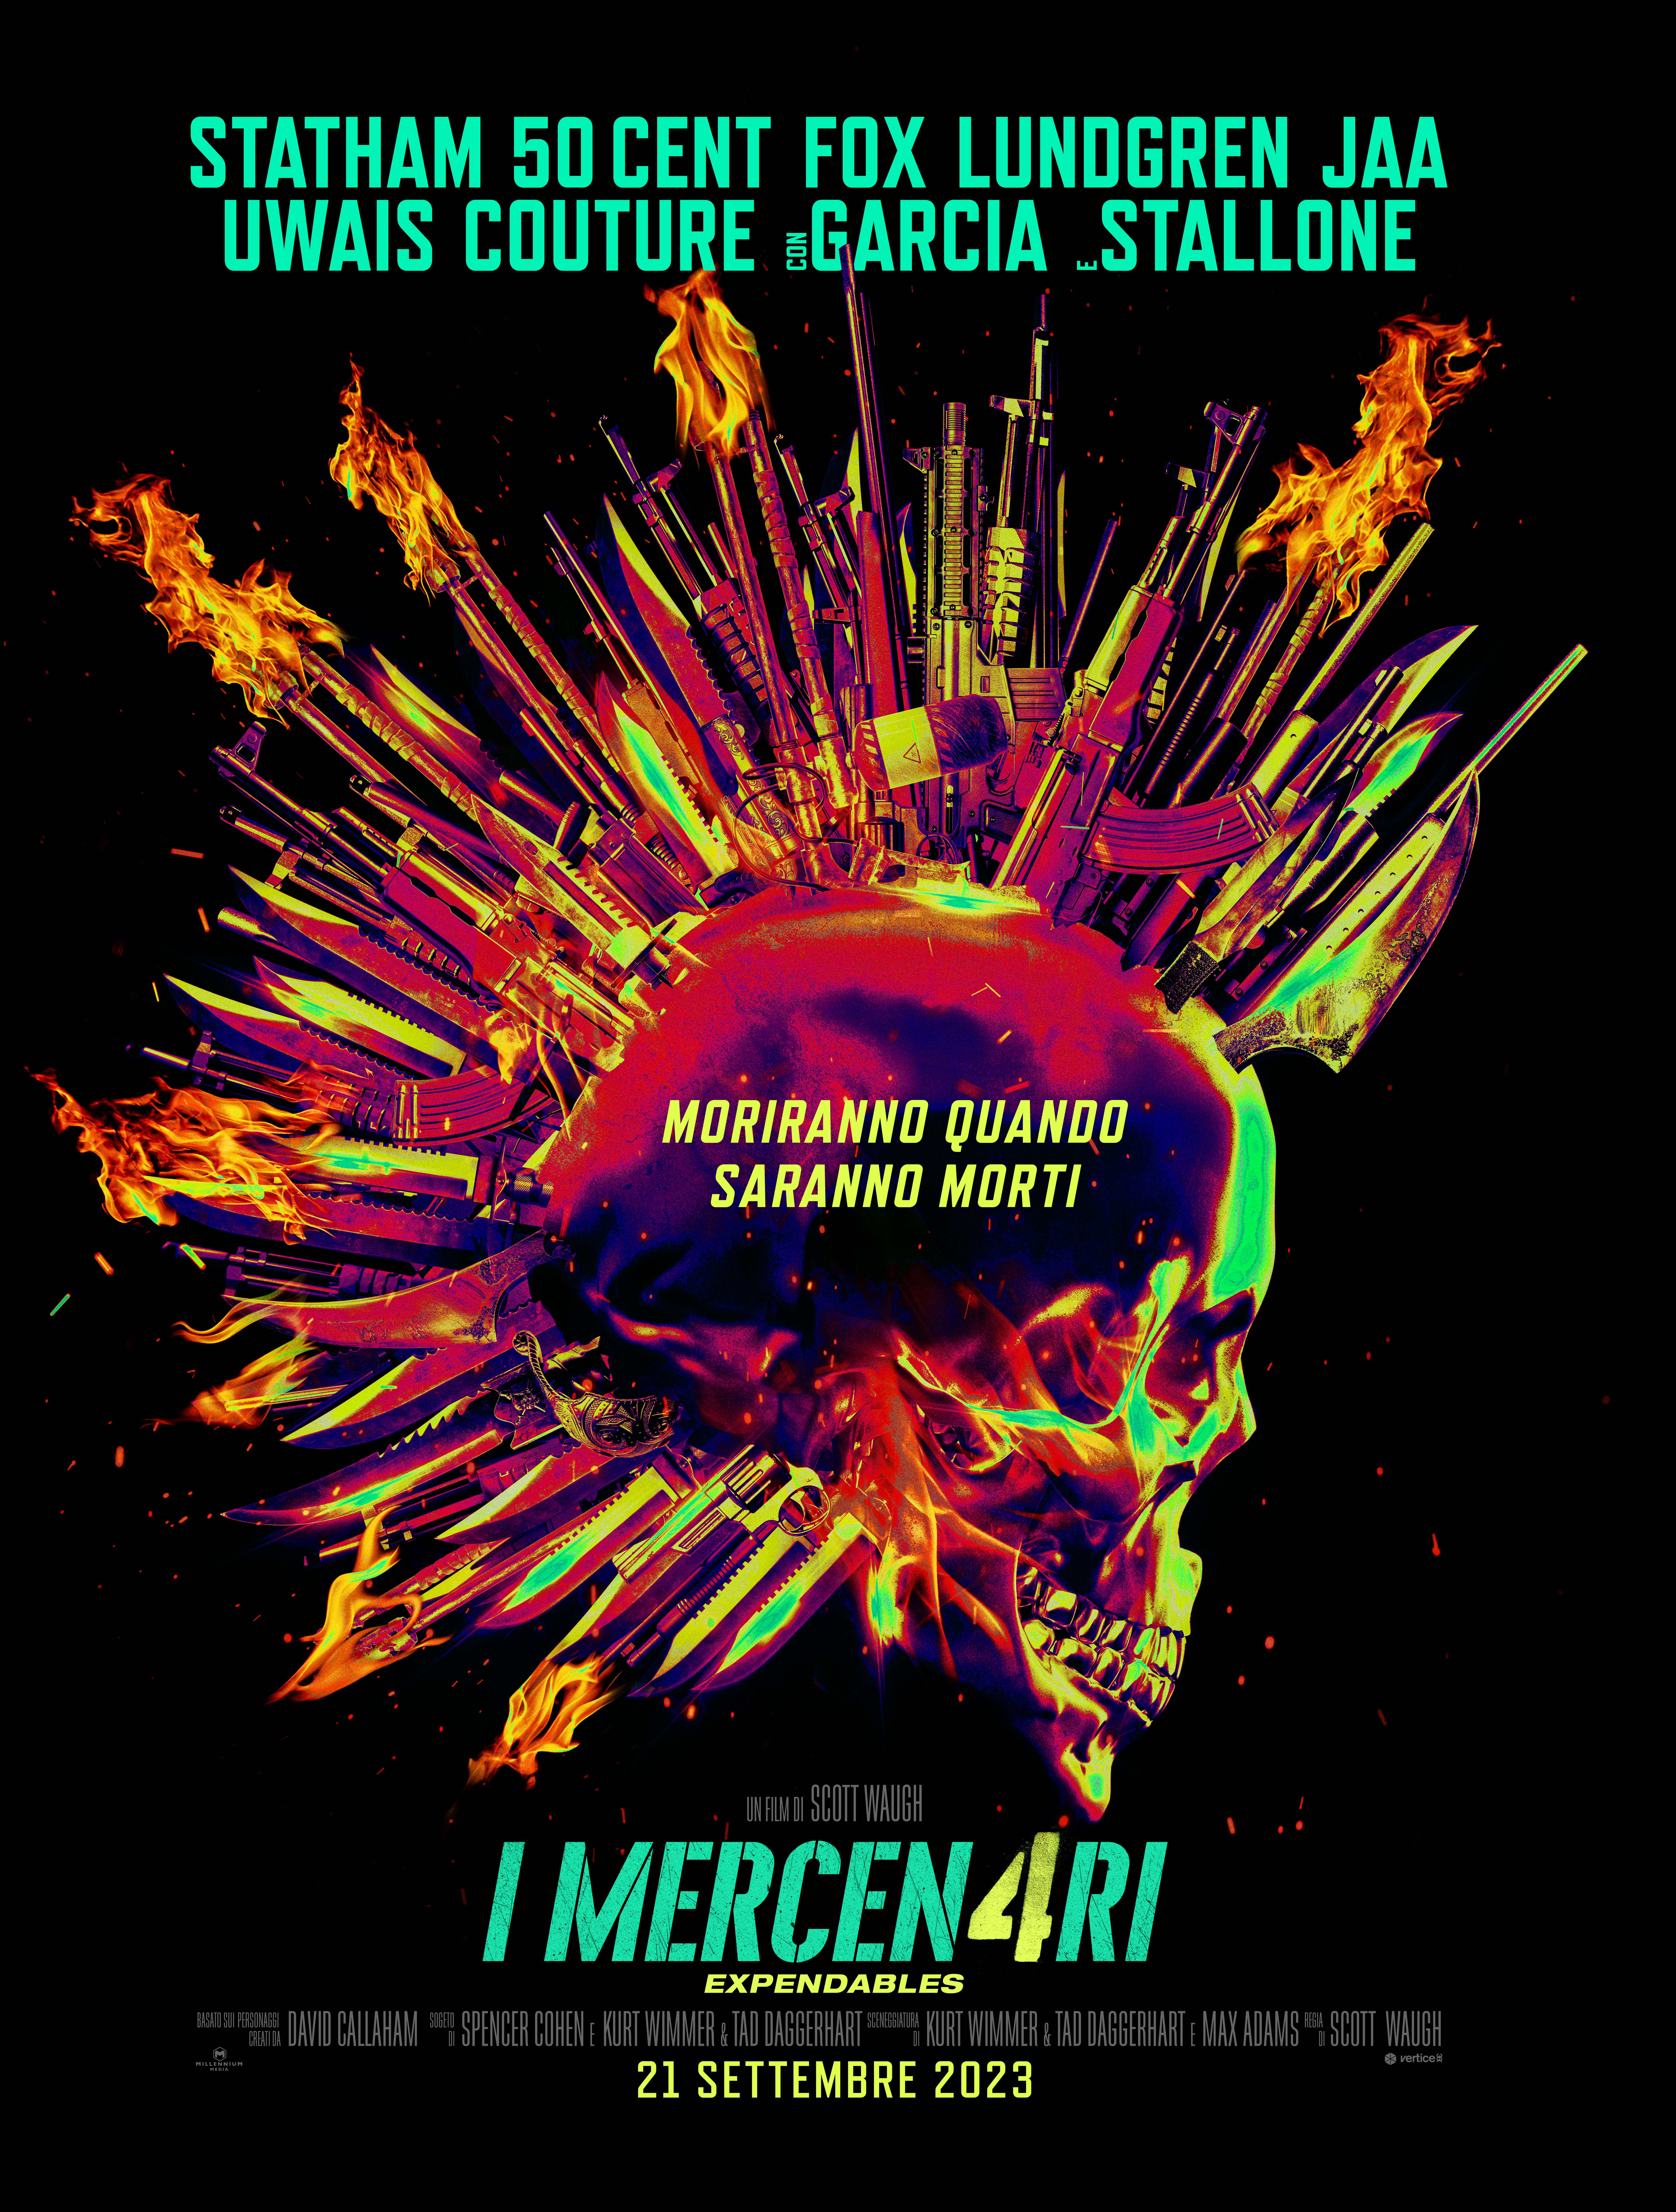 teaser poster I Mercenari 4_Expendables